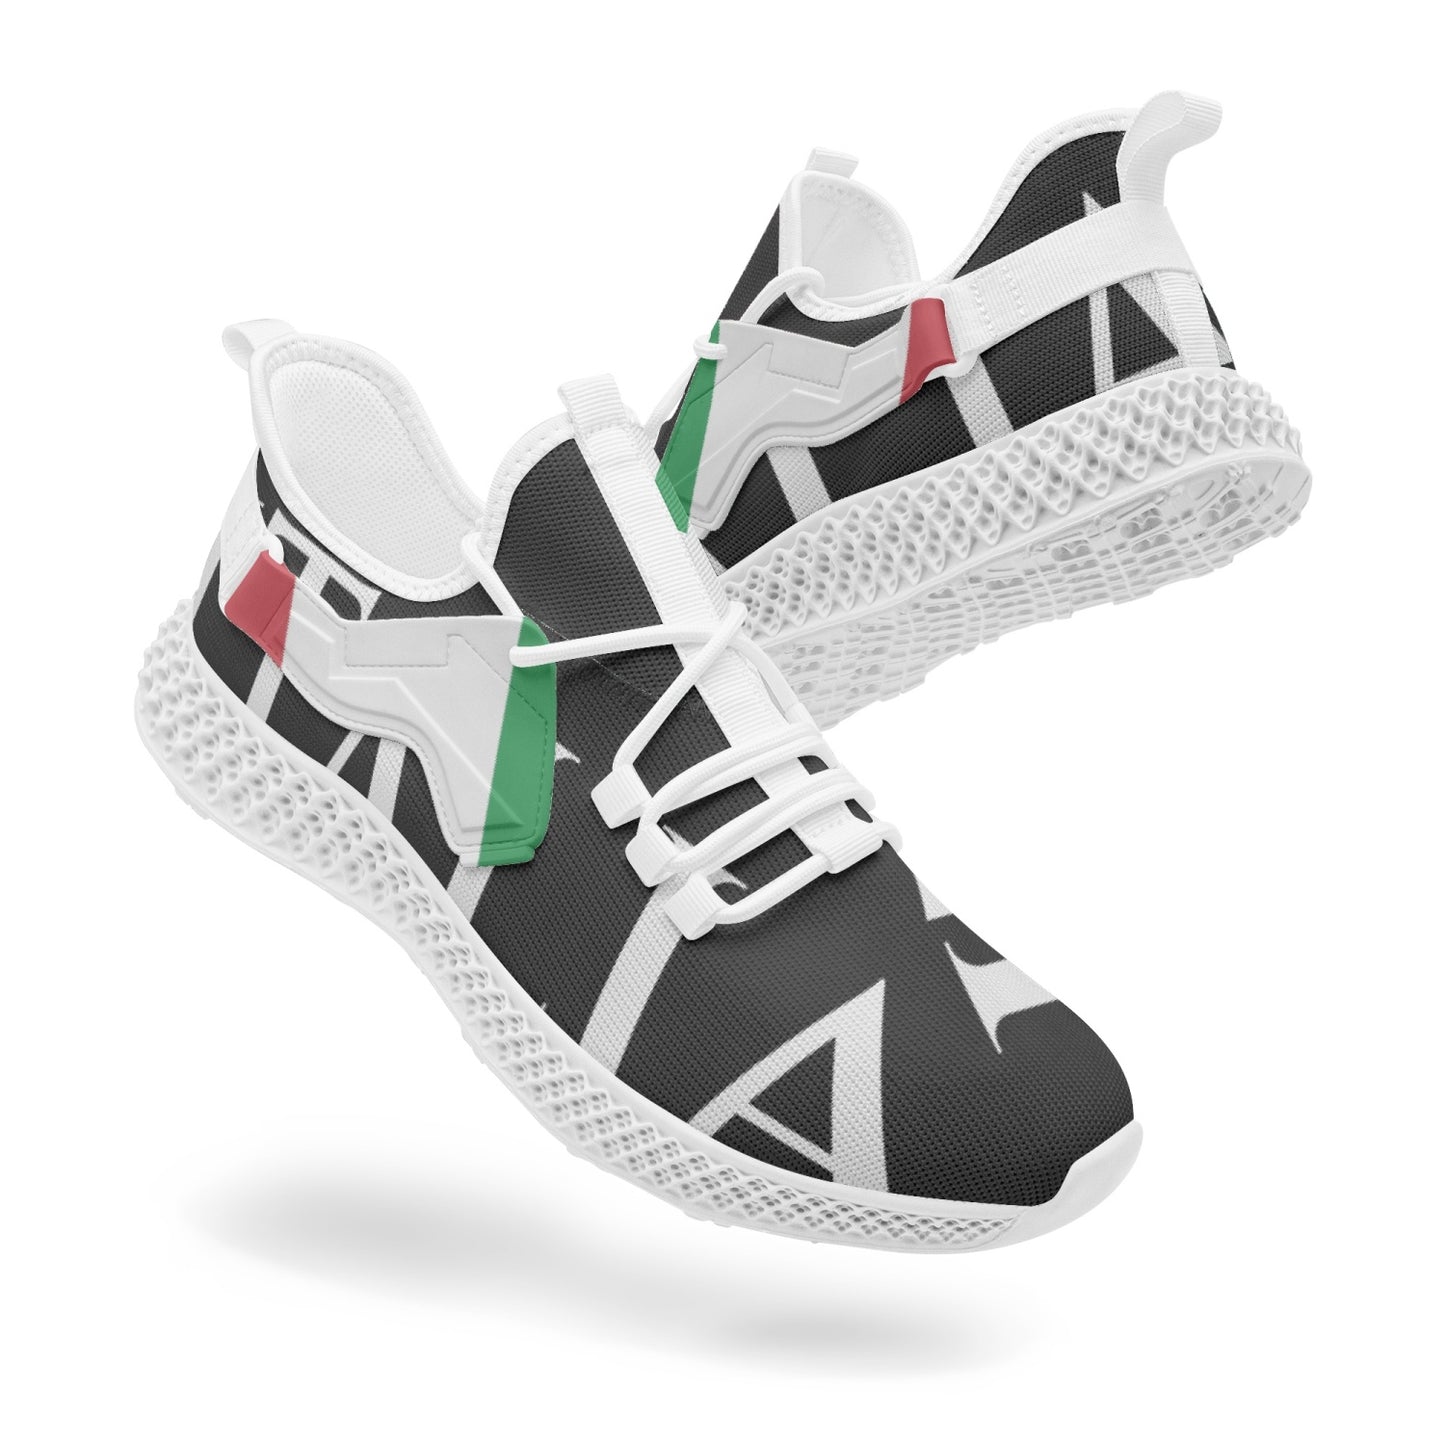 Italia Net Mesh Knit Sneakers Black - men/women sizes